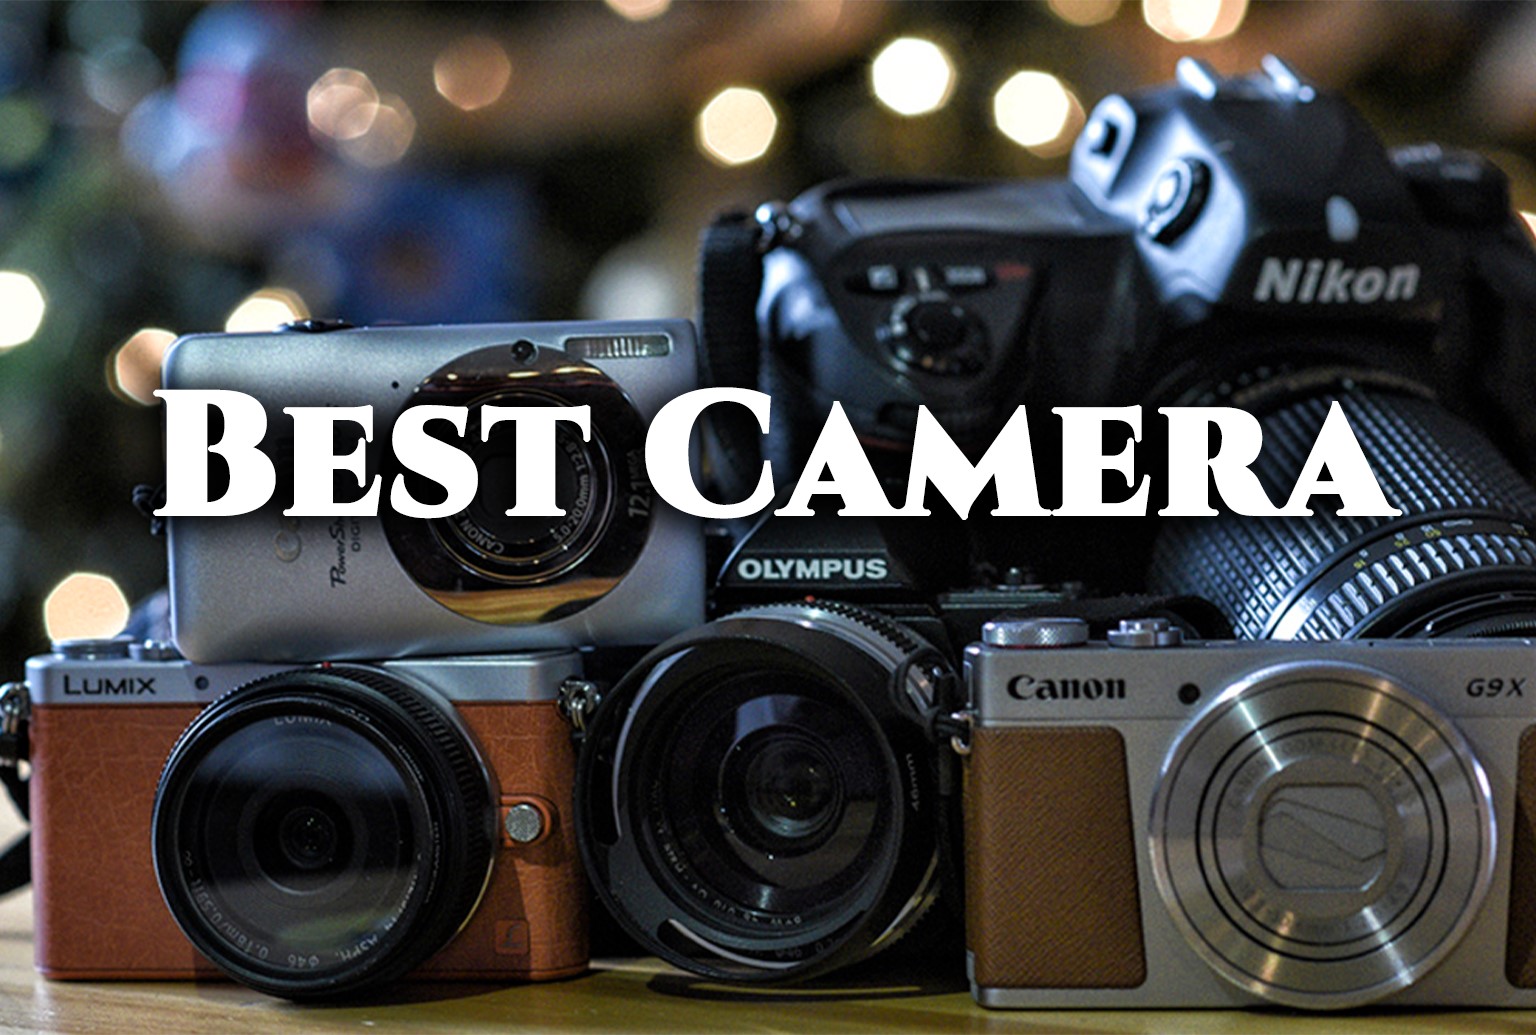 Best camera